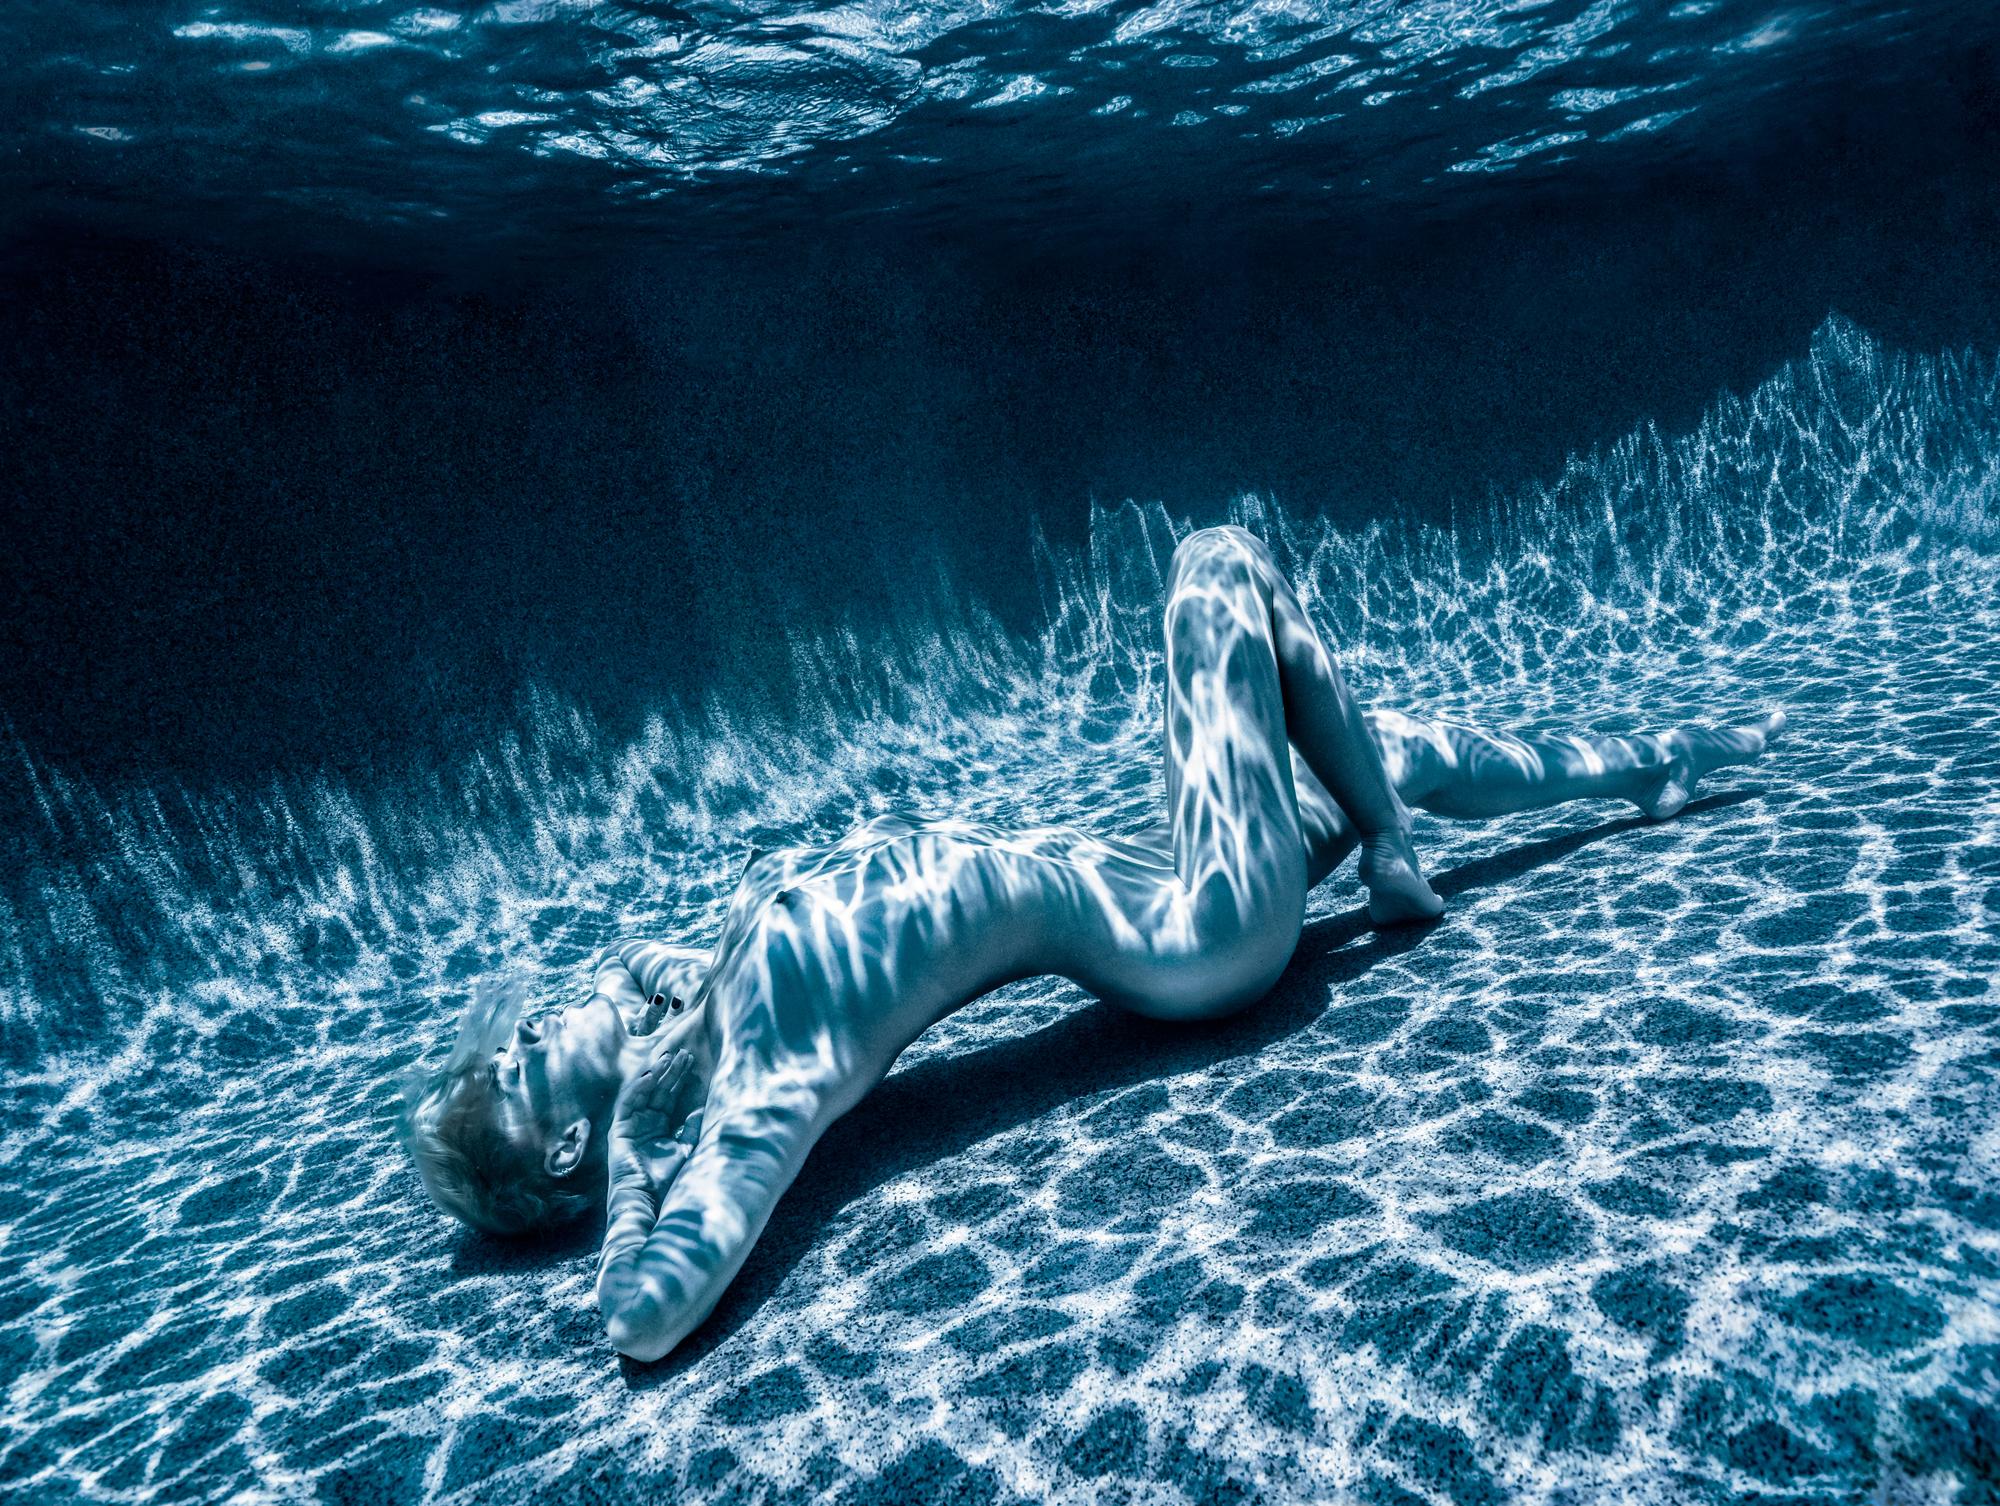 Alex Sher Nude Photograph - Moonlight - underwater nude photograph - print on aluminum 9 x 12"